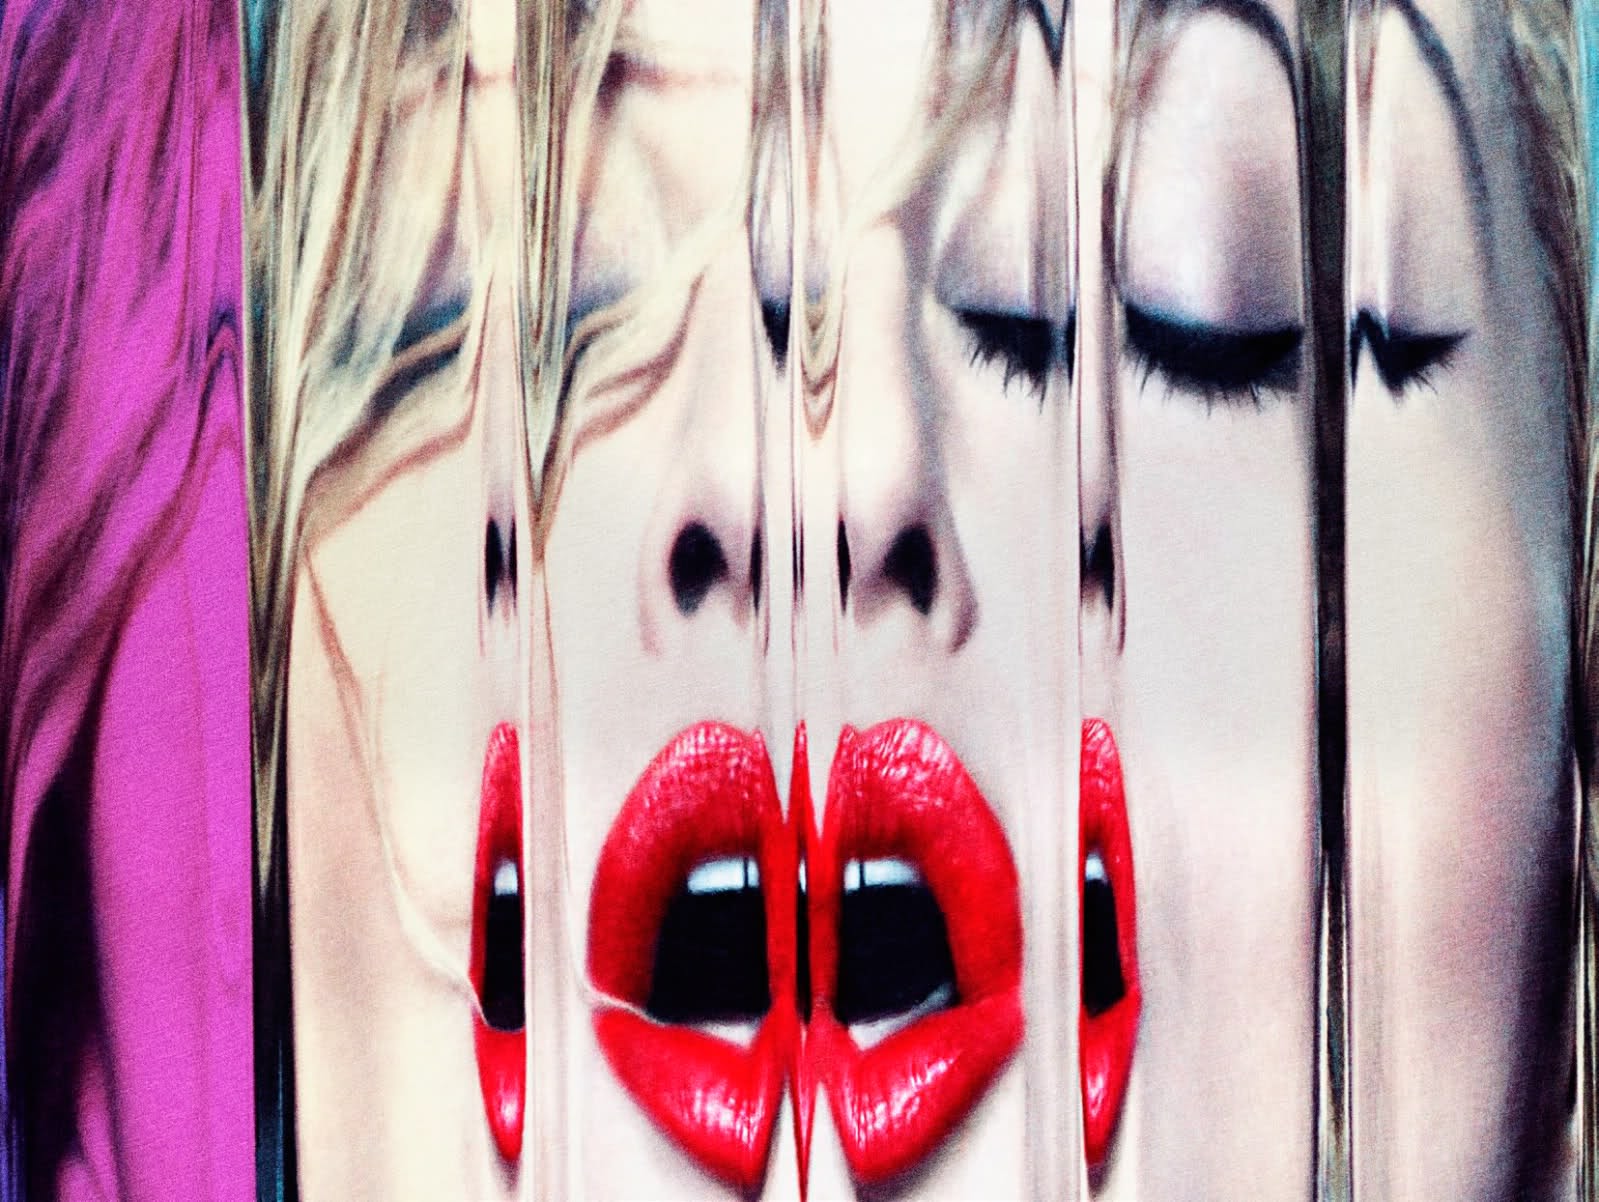 Madonna posing for her MDNA album